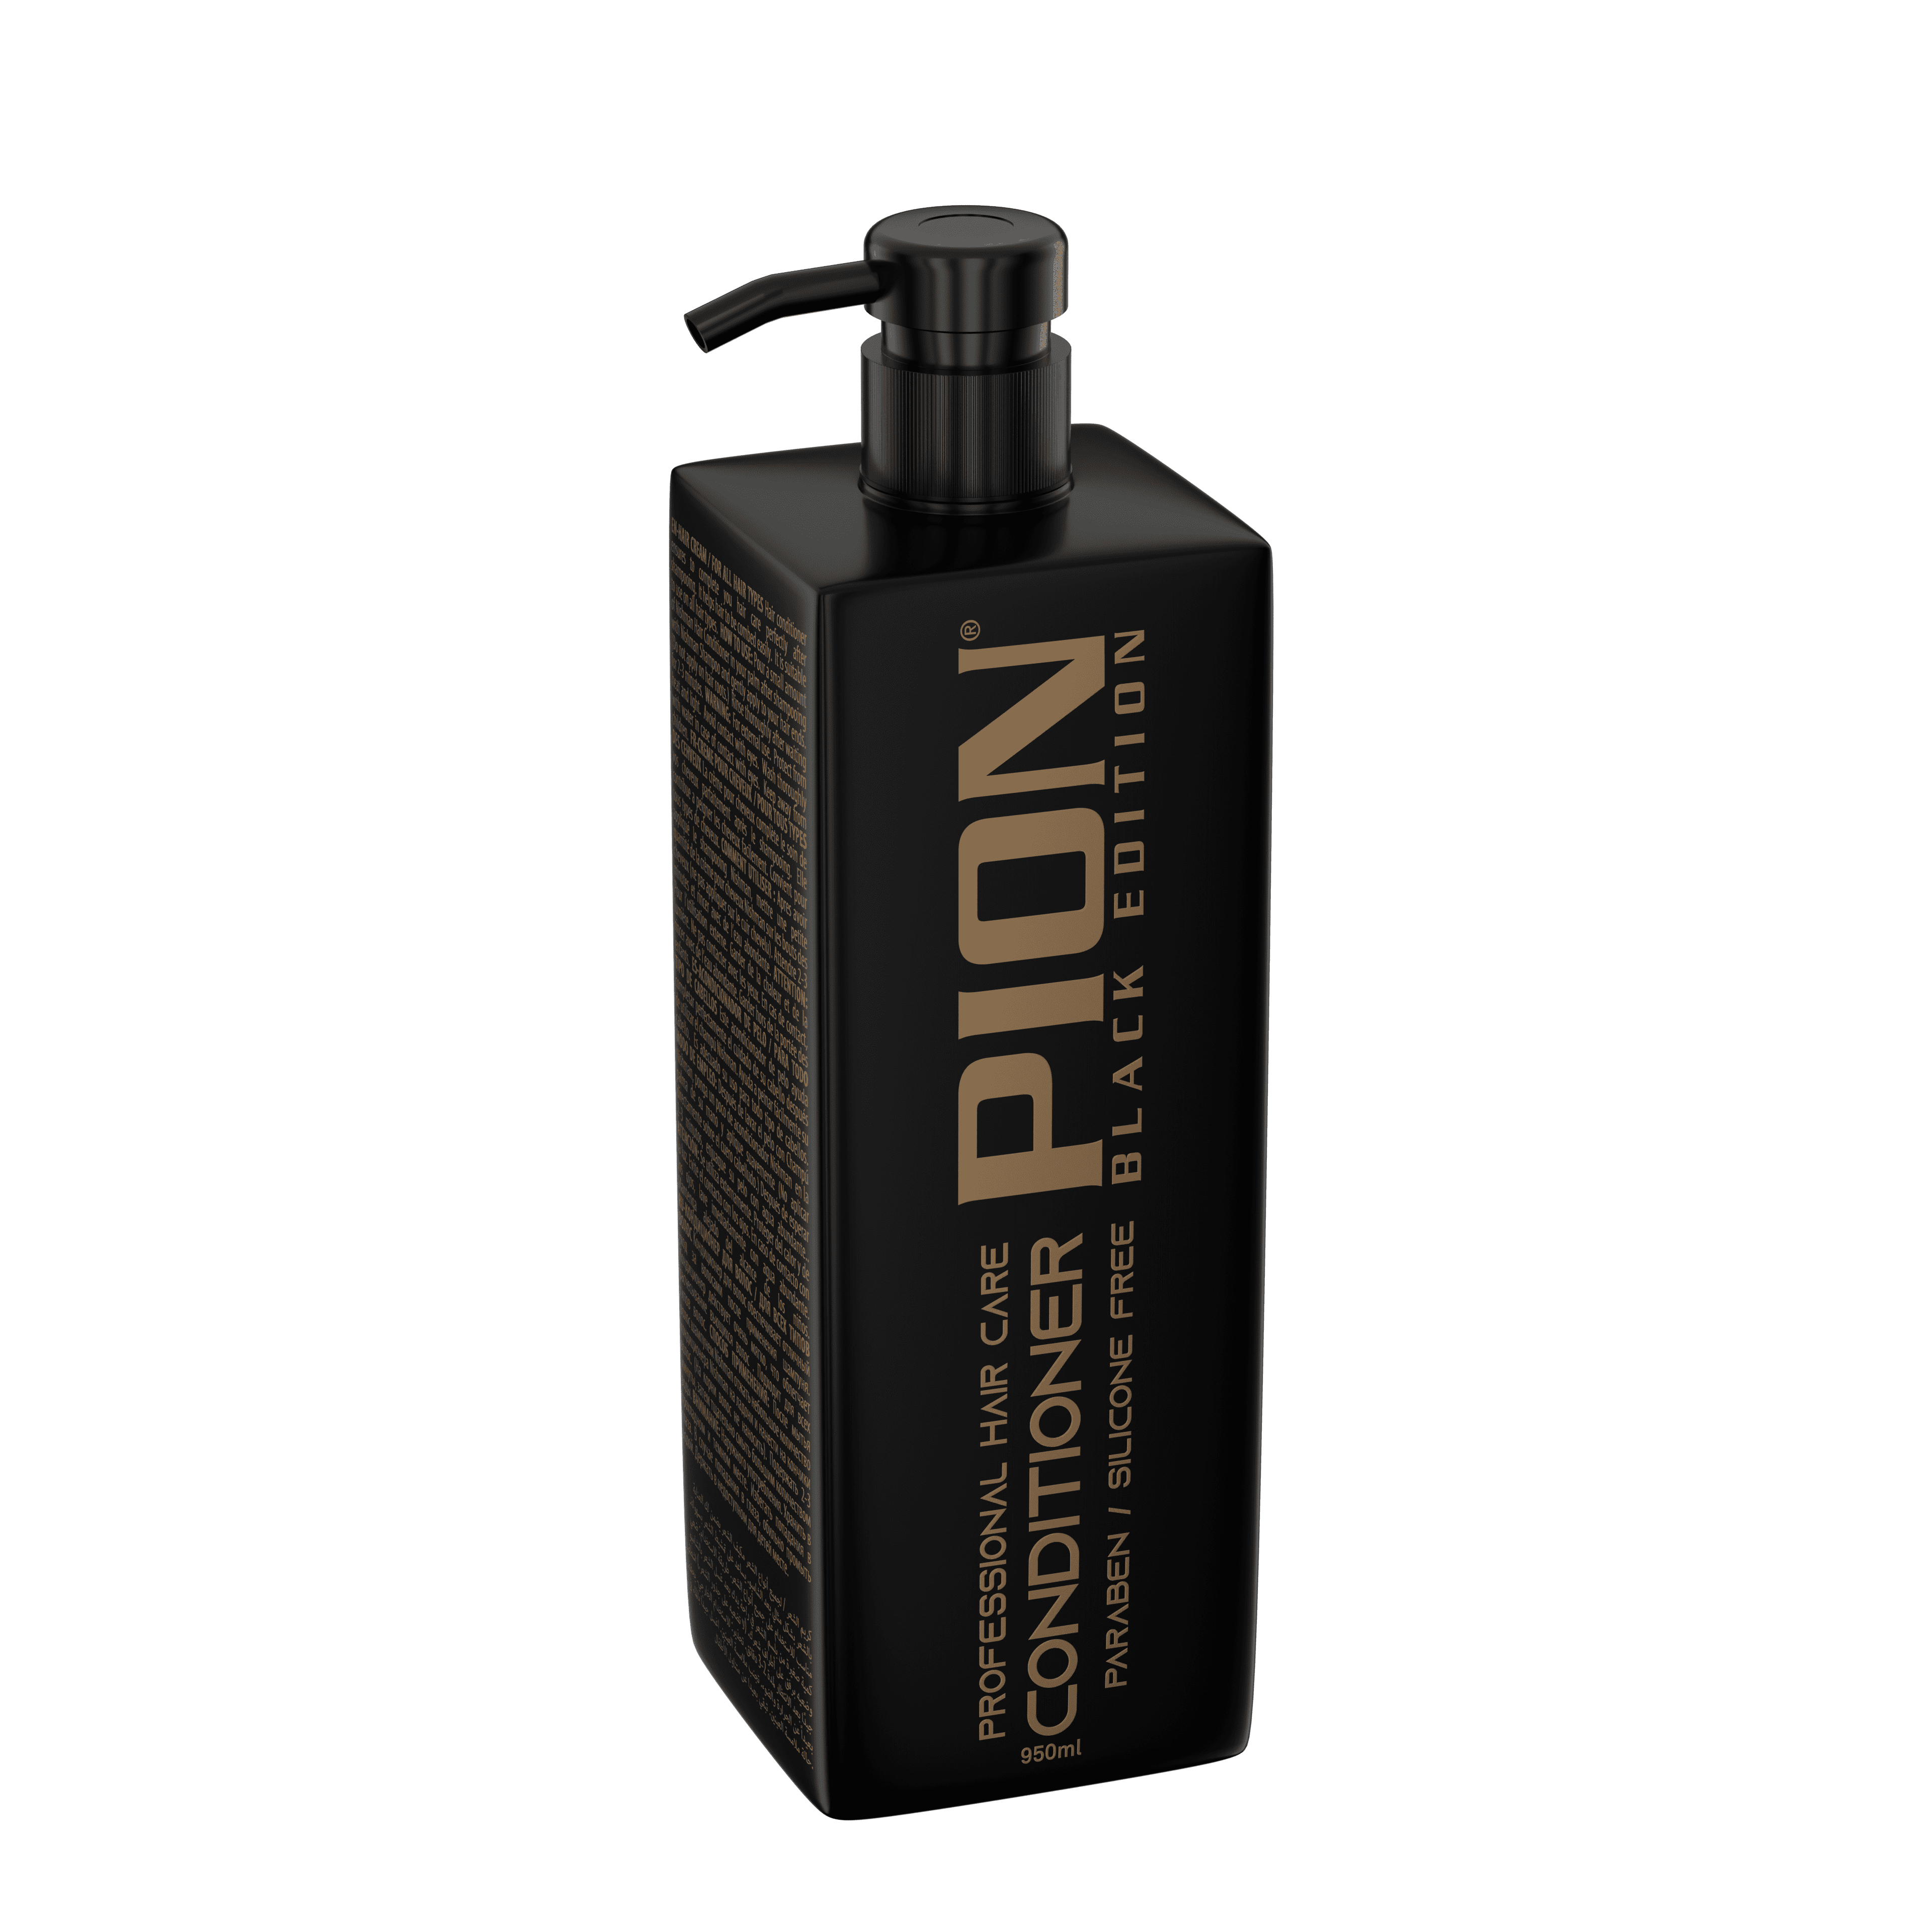 Pion Hair Care Conditioner Keratin 950ml - PION BLACK EDITION